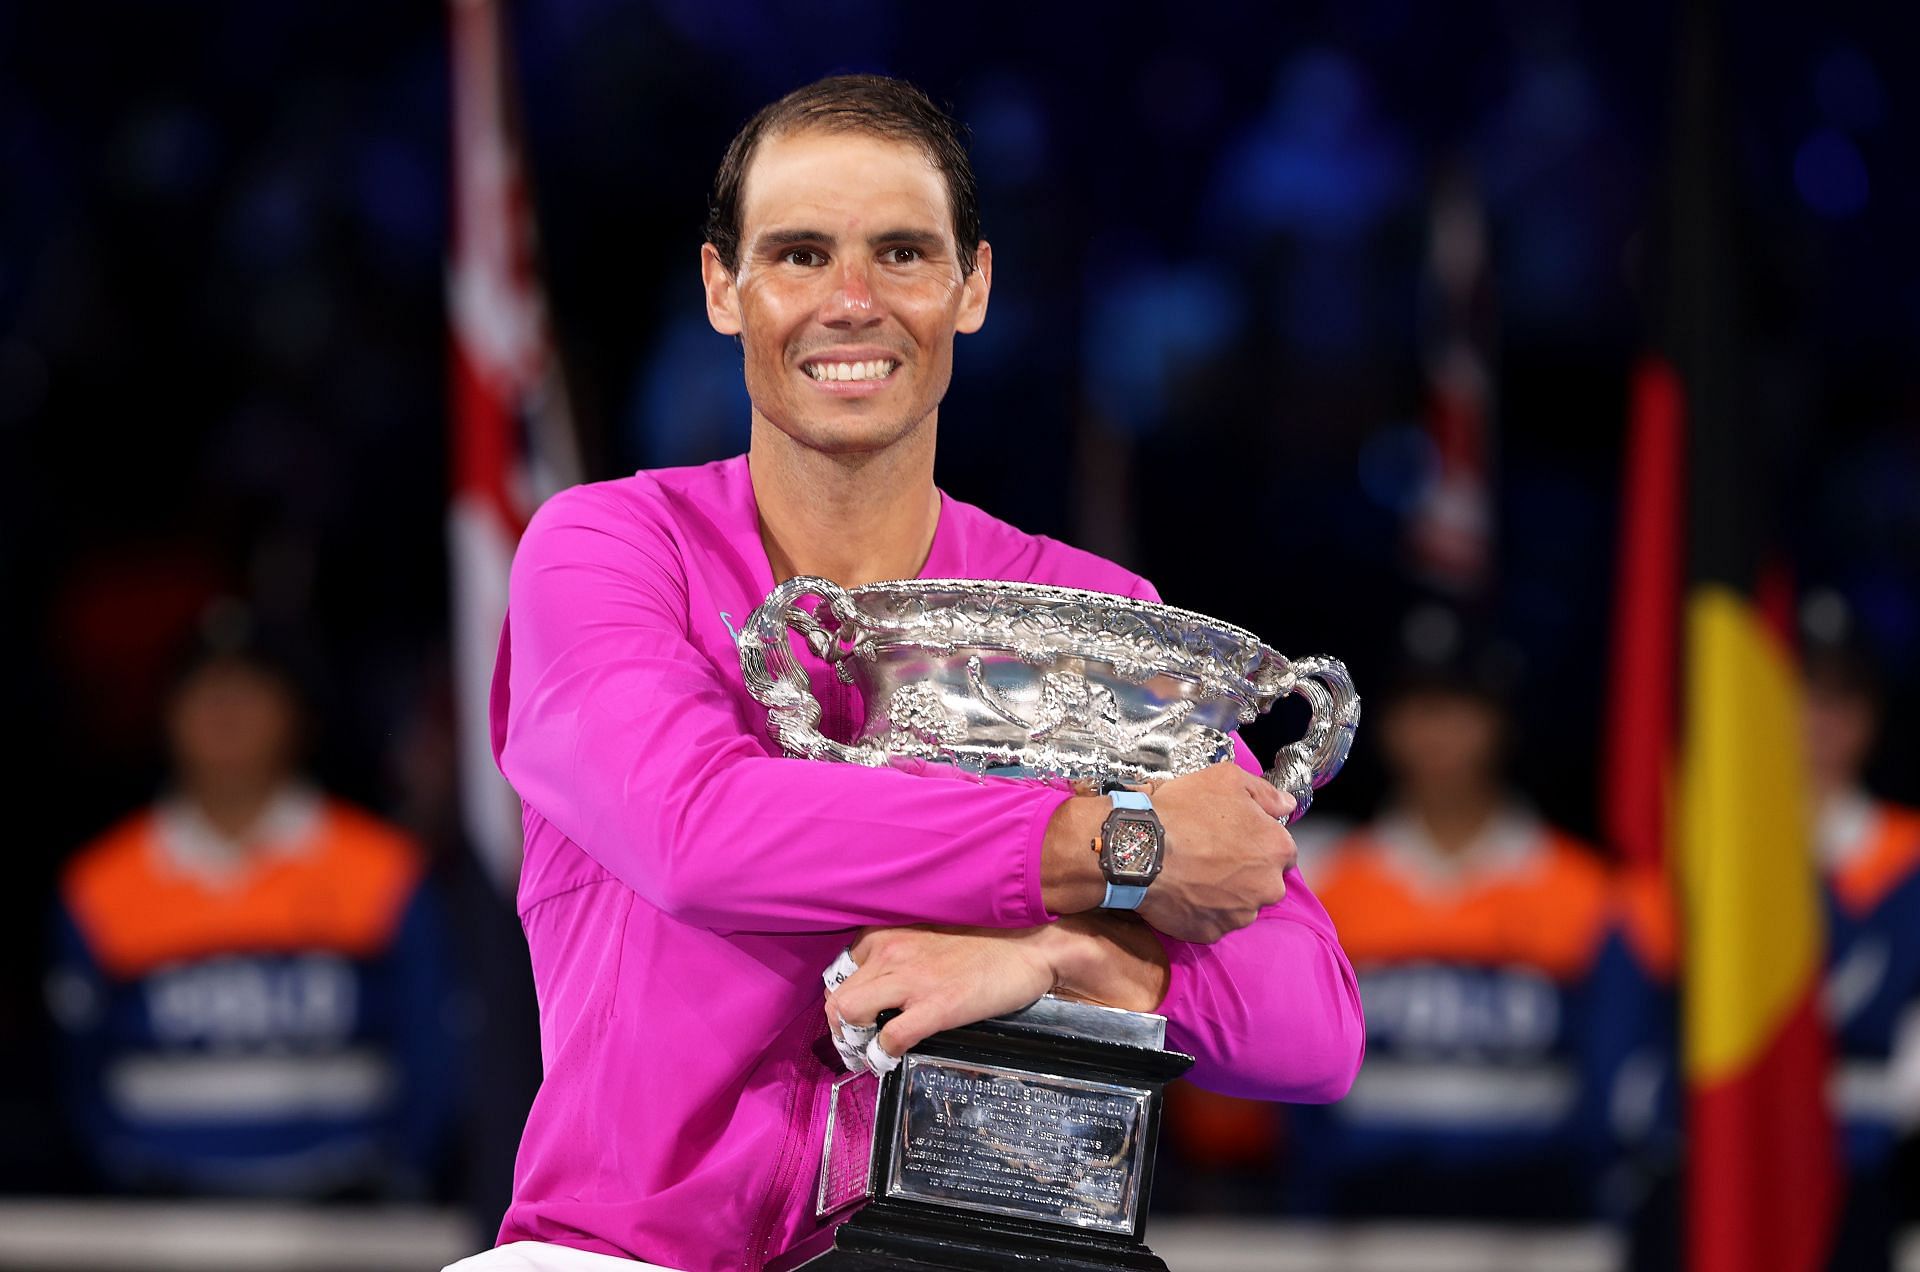 Rafael Nadal won his record 21st Grand Slam at the Australian Open